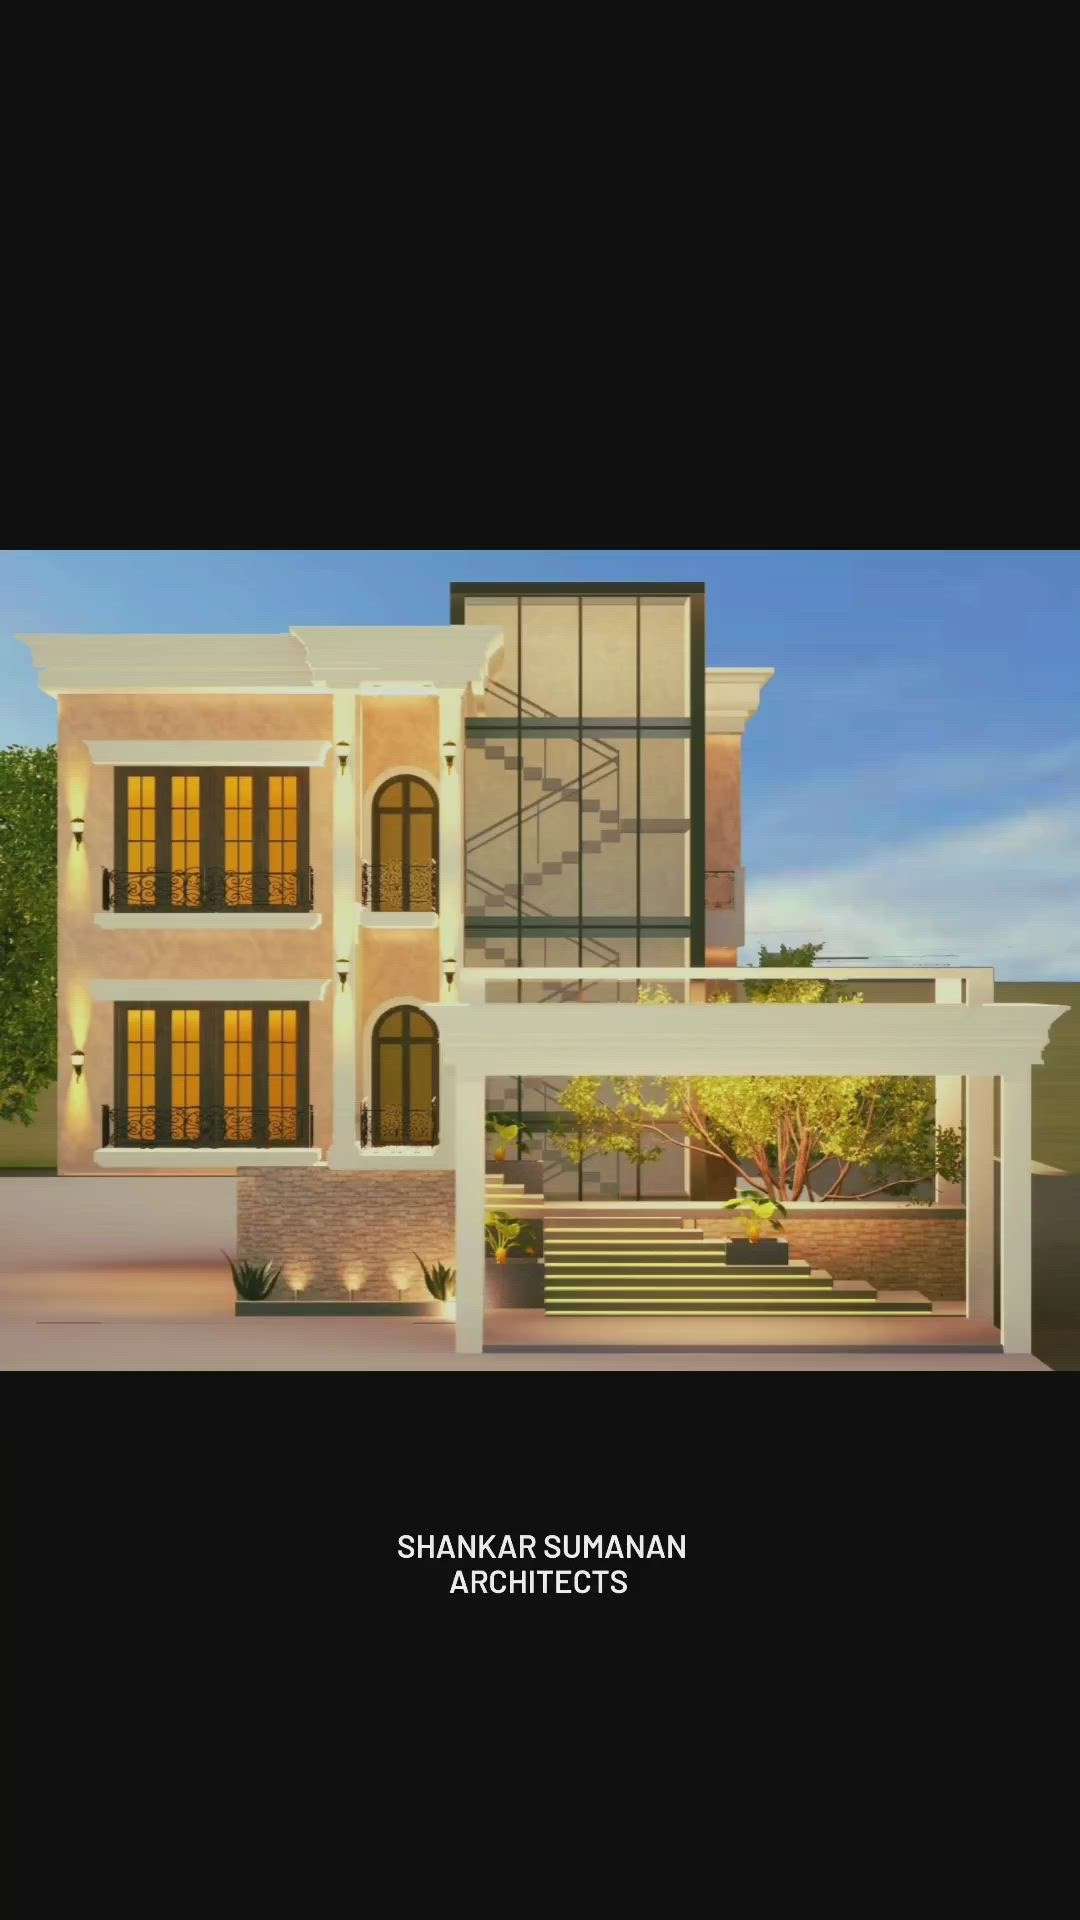 upcoming buildings
'sketch before you start'
Shankar sumanan architects 
#Thiruvananthapuram #reelsindia #architecturedesign  #elevations #views #2022 #villa_projects